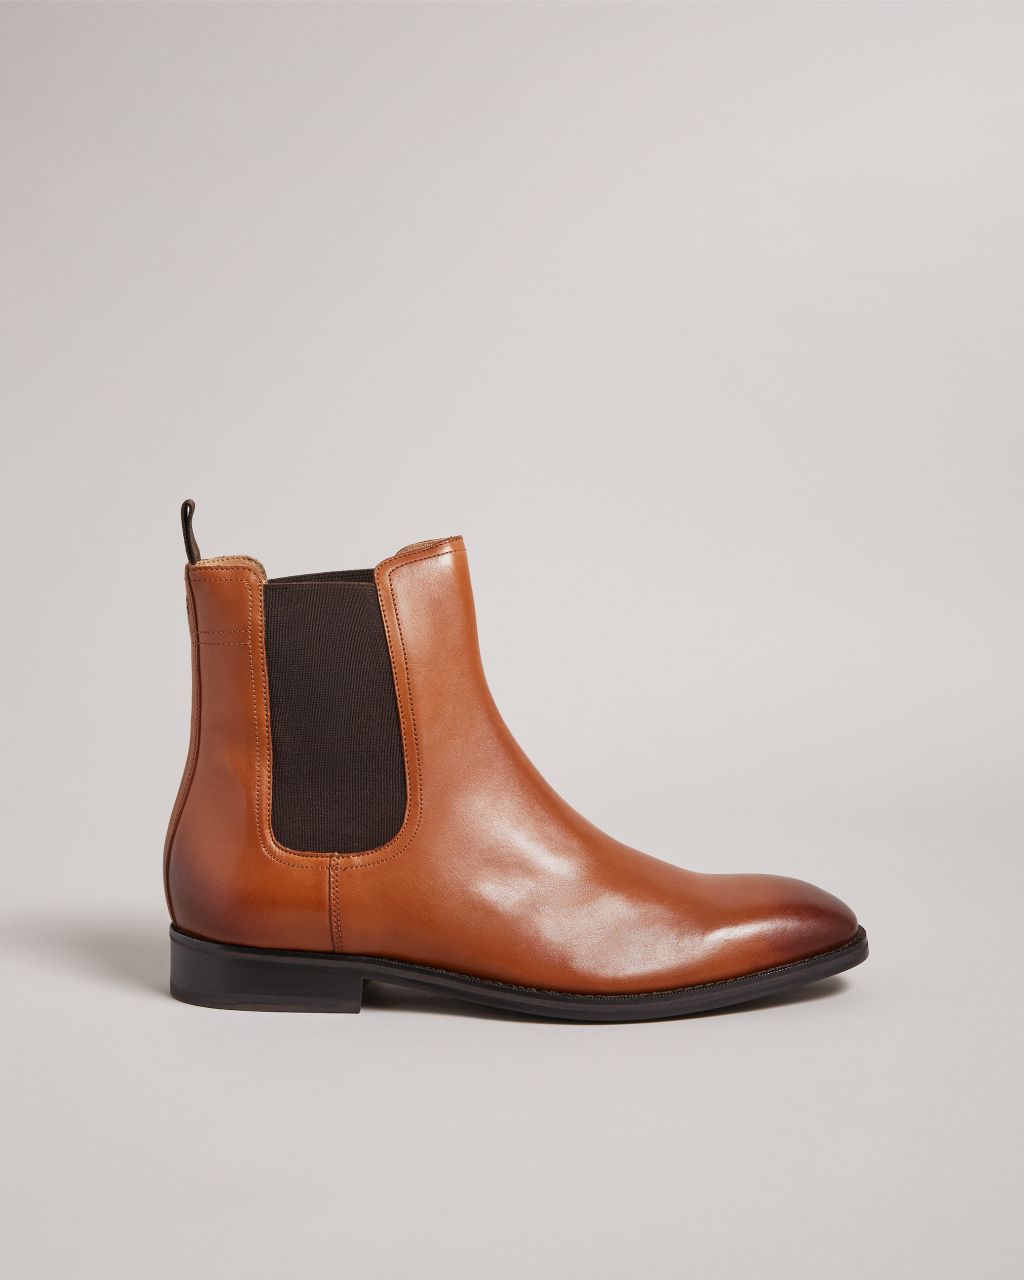 Ted Baker Men's Leather Chelsea Boots in Tan, Maisonn